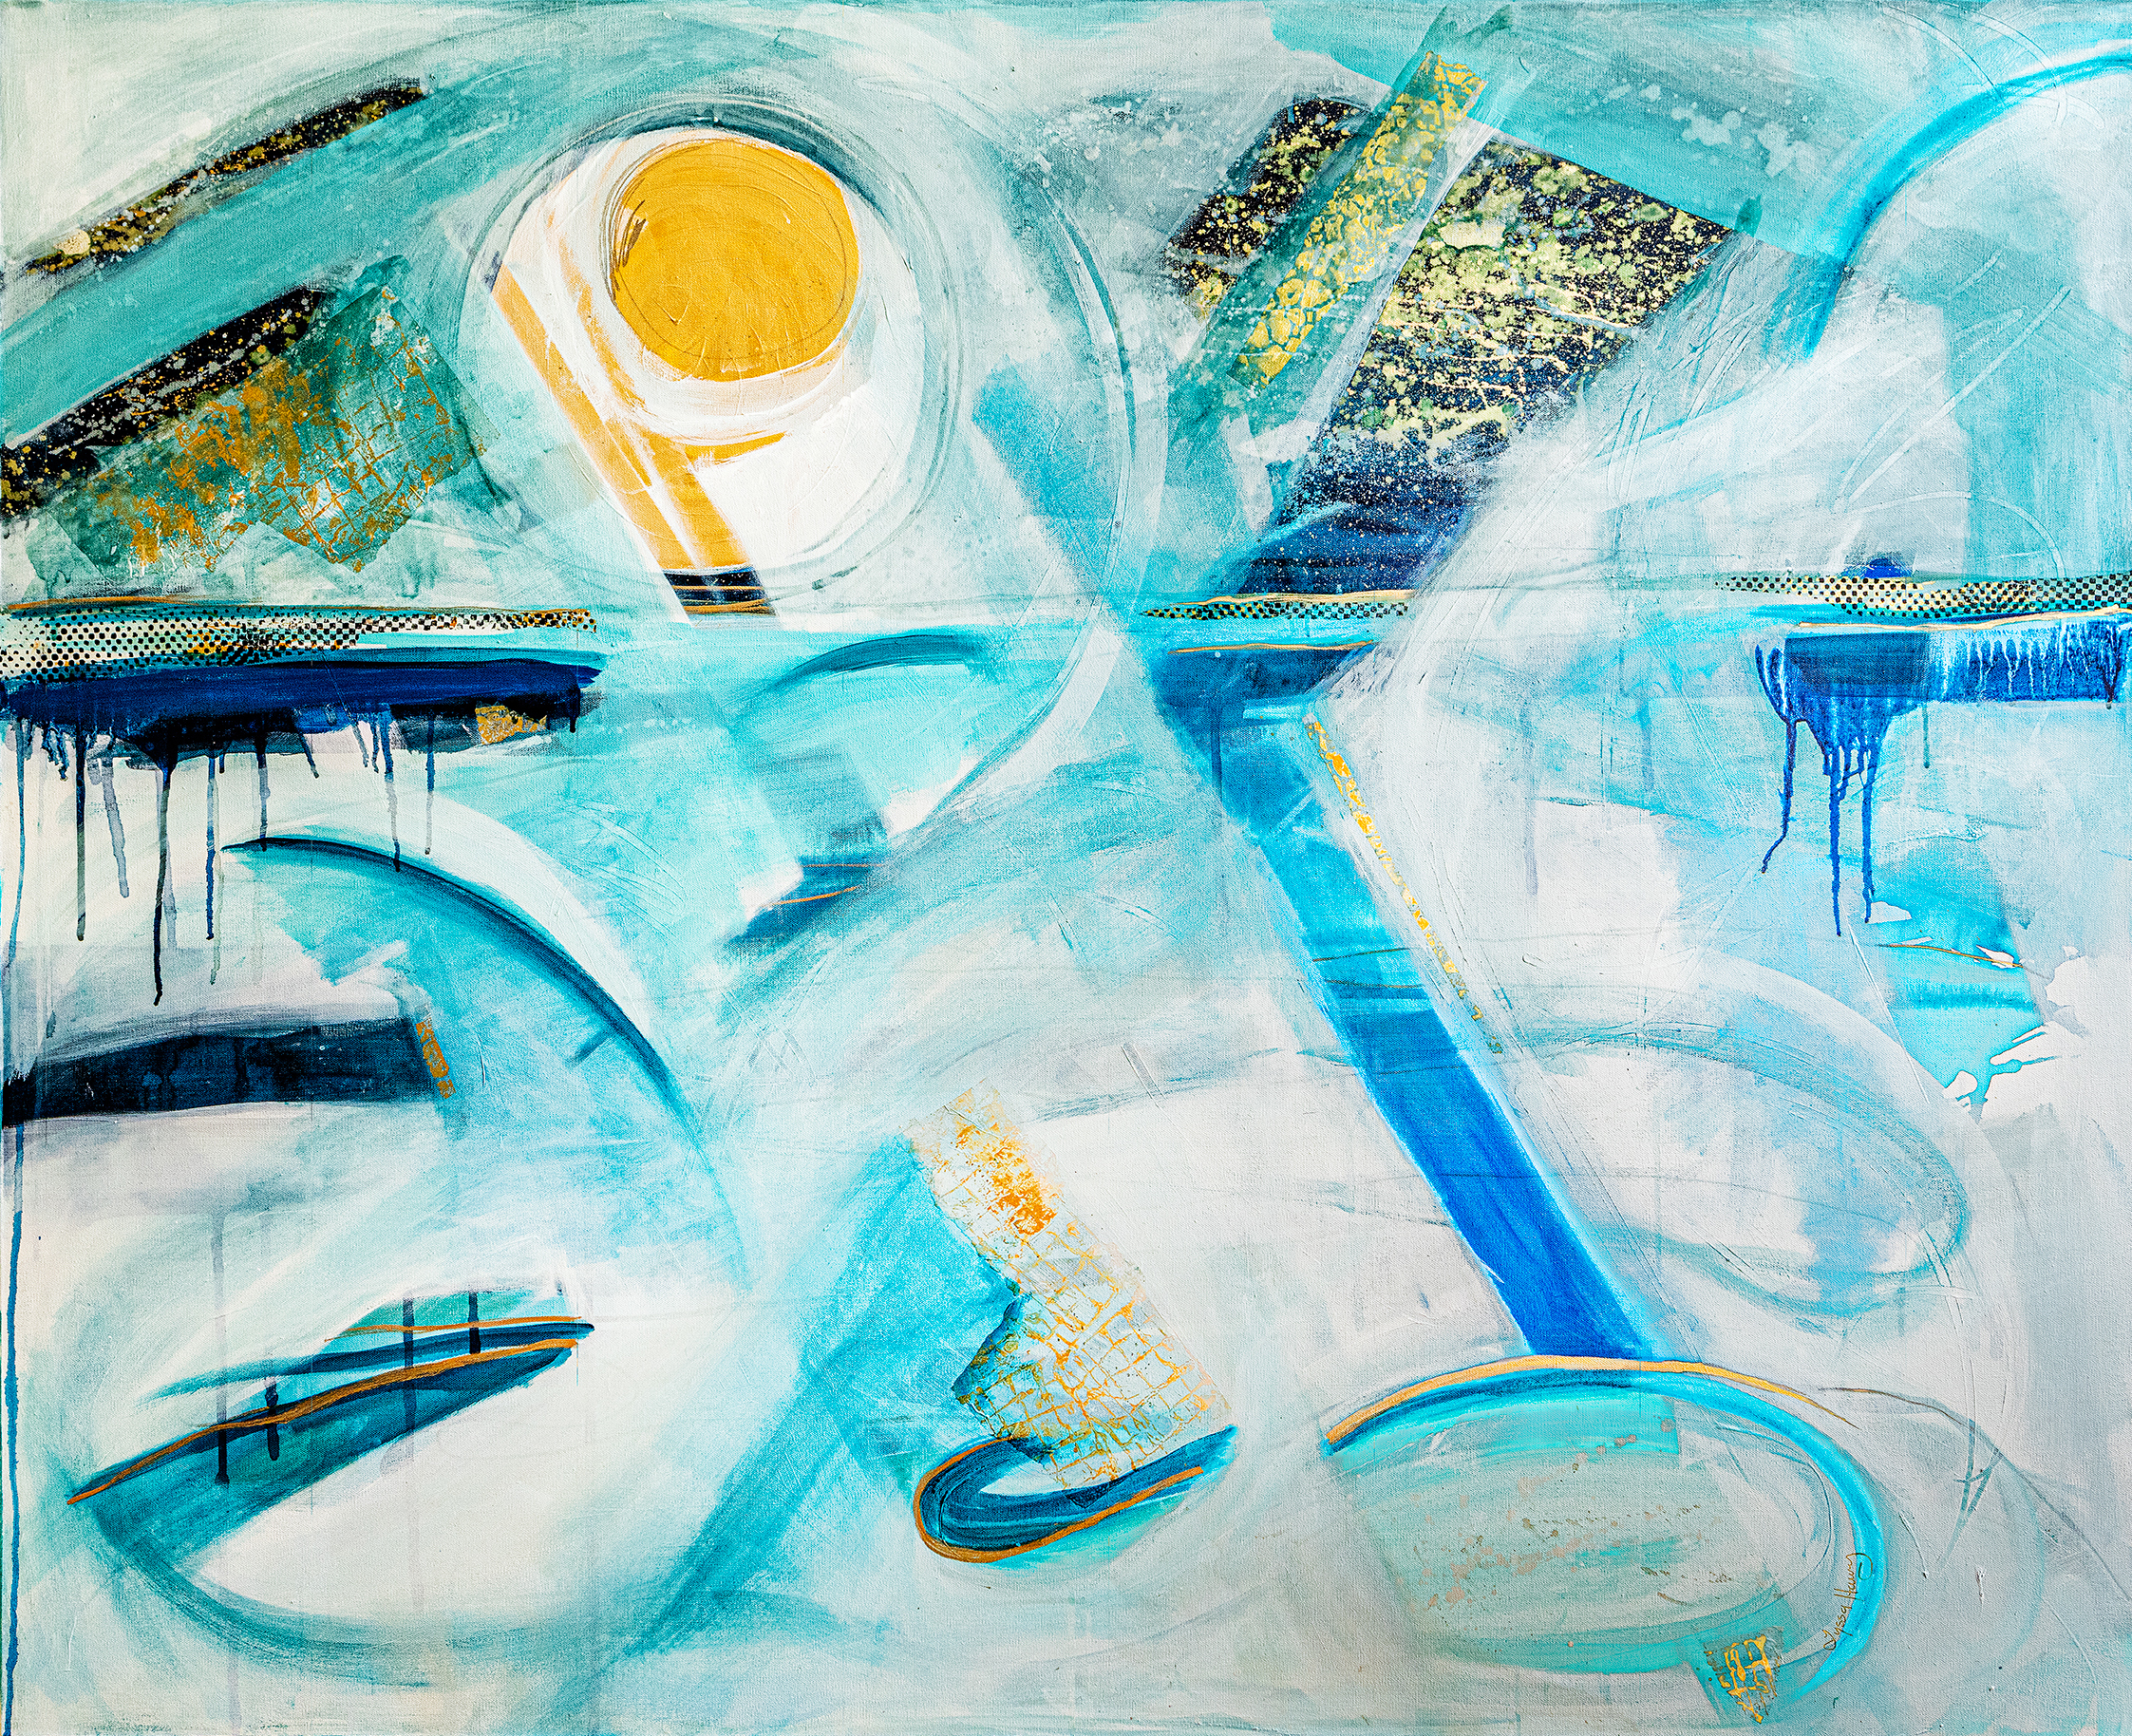  Lyssa Harvey’s Shades of Blue, watermedia on canvas, 4 by 5 feet. 